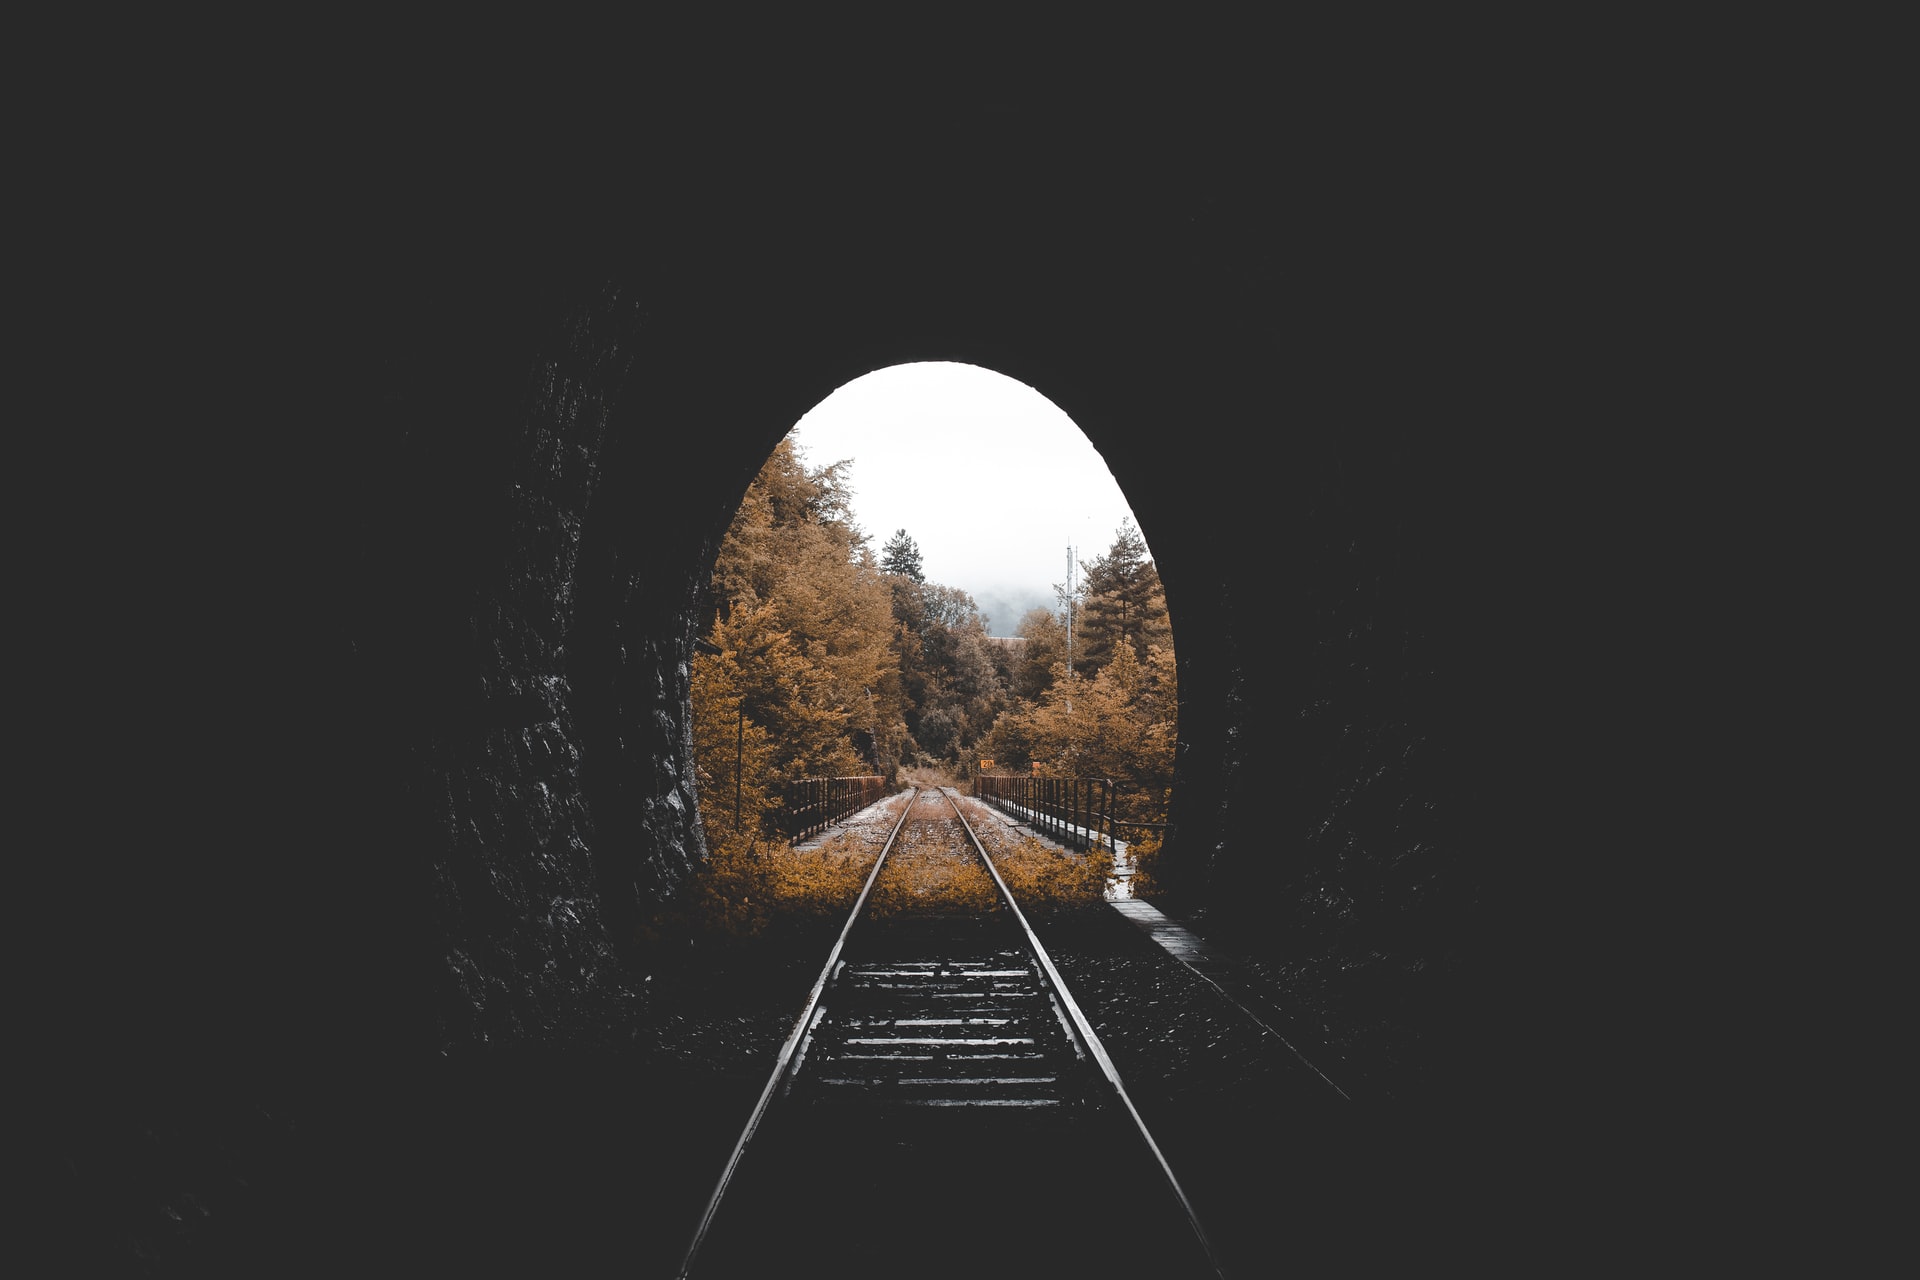 Photo of train tunnel by Florian van Duyn on Unsplash